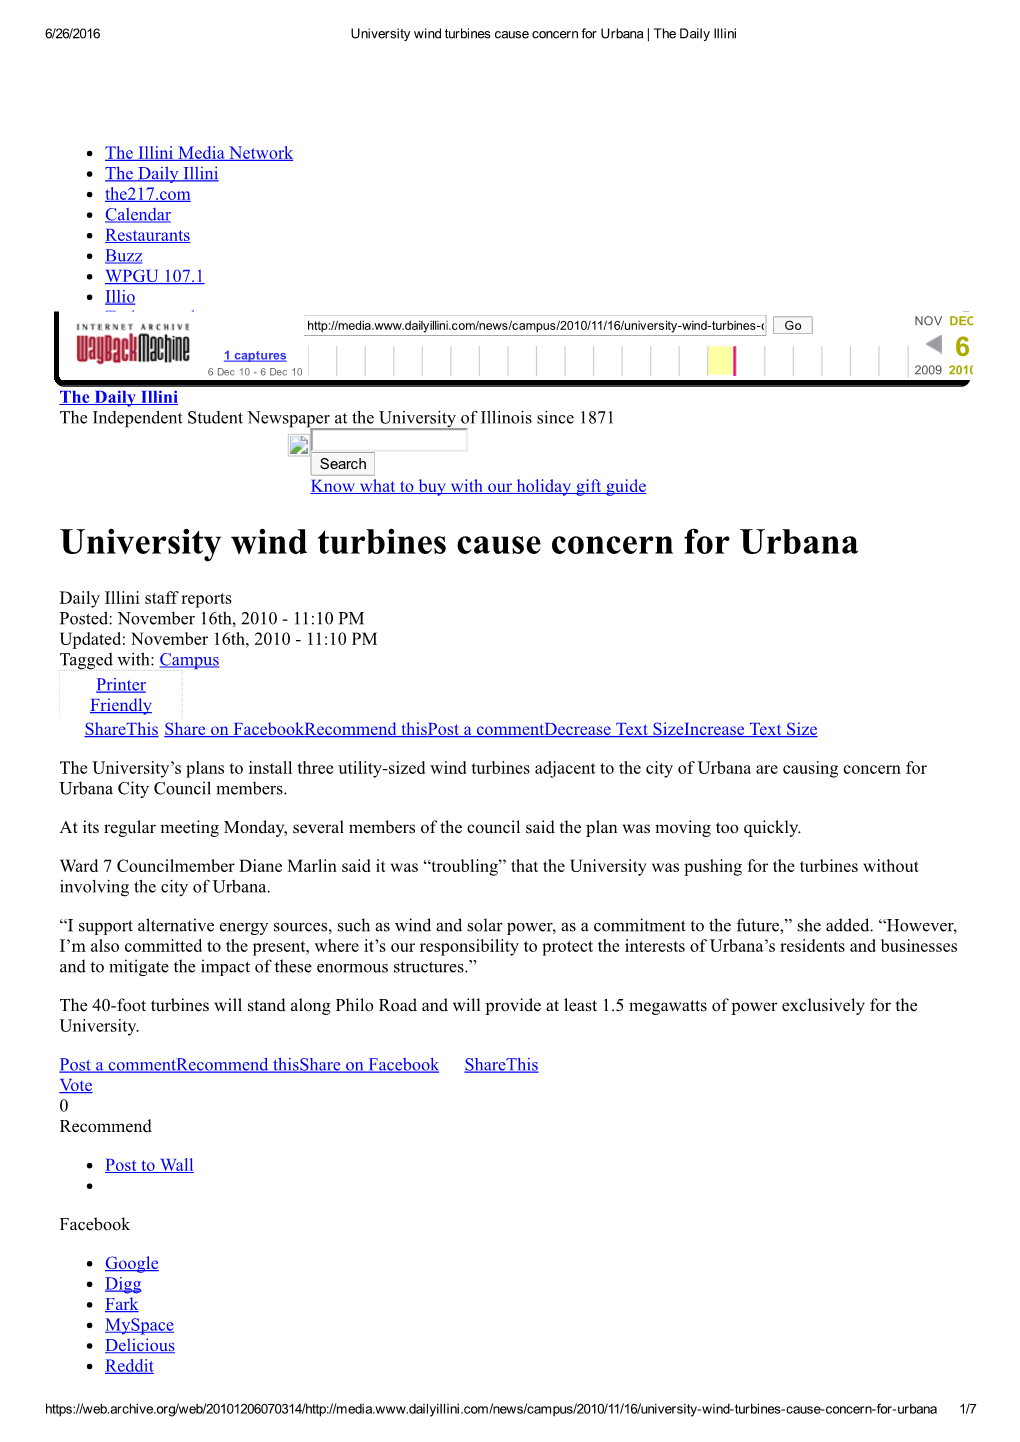 University Wind Turbines Cause Concern for Urbana.Pdf